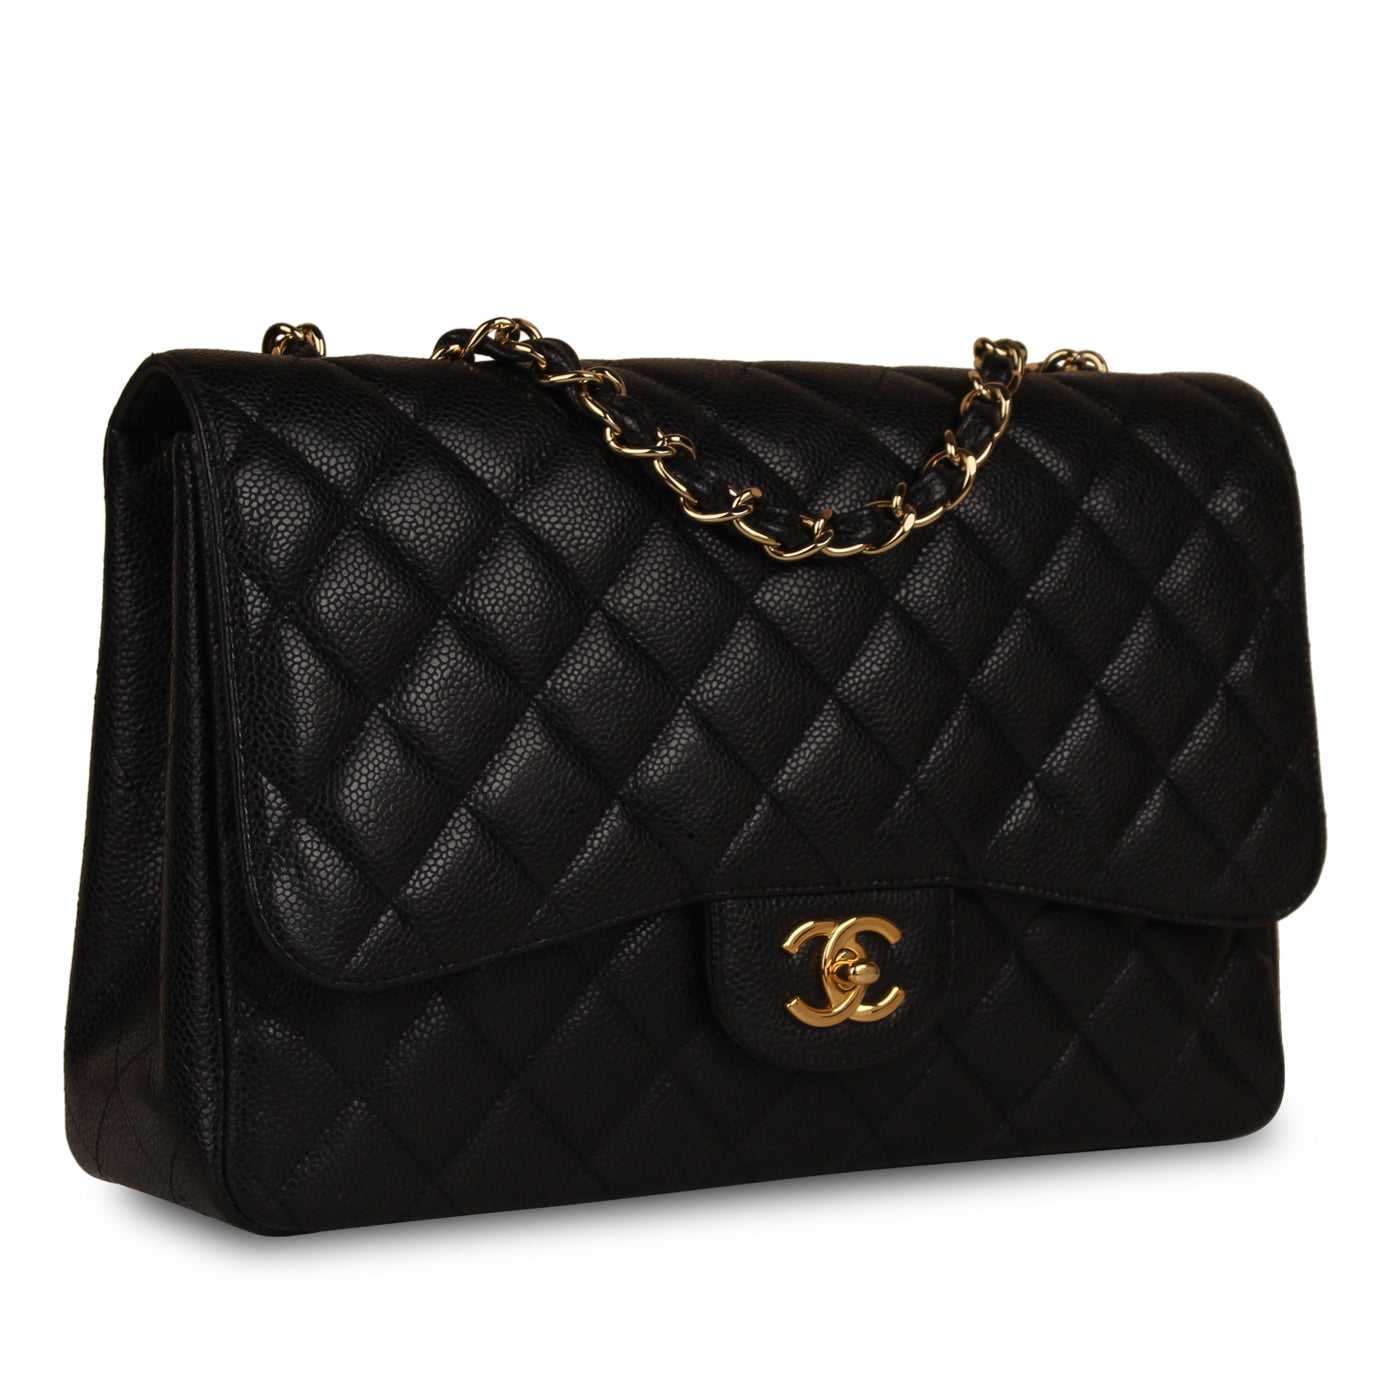 Chanel - Classic Flap Bag - Jumbo - Black Caviar - GHW